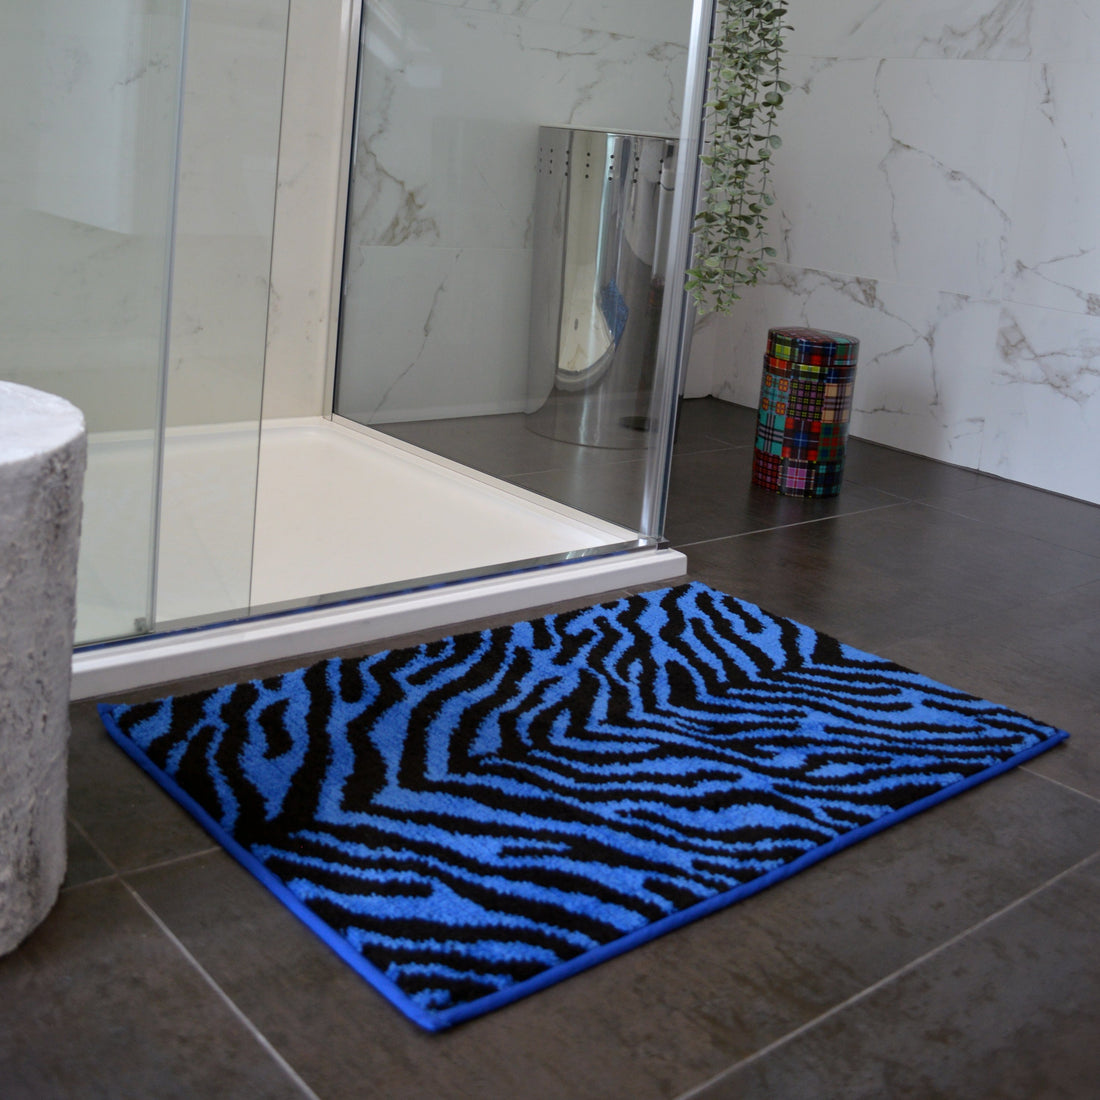 Zebra Print Bath Mat - Bright Blue and Black